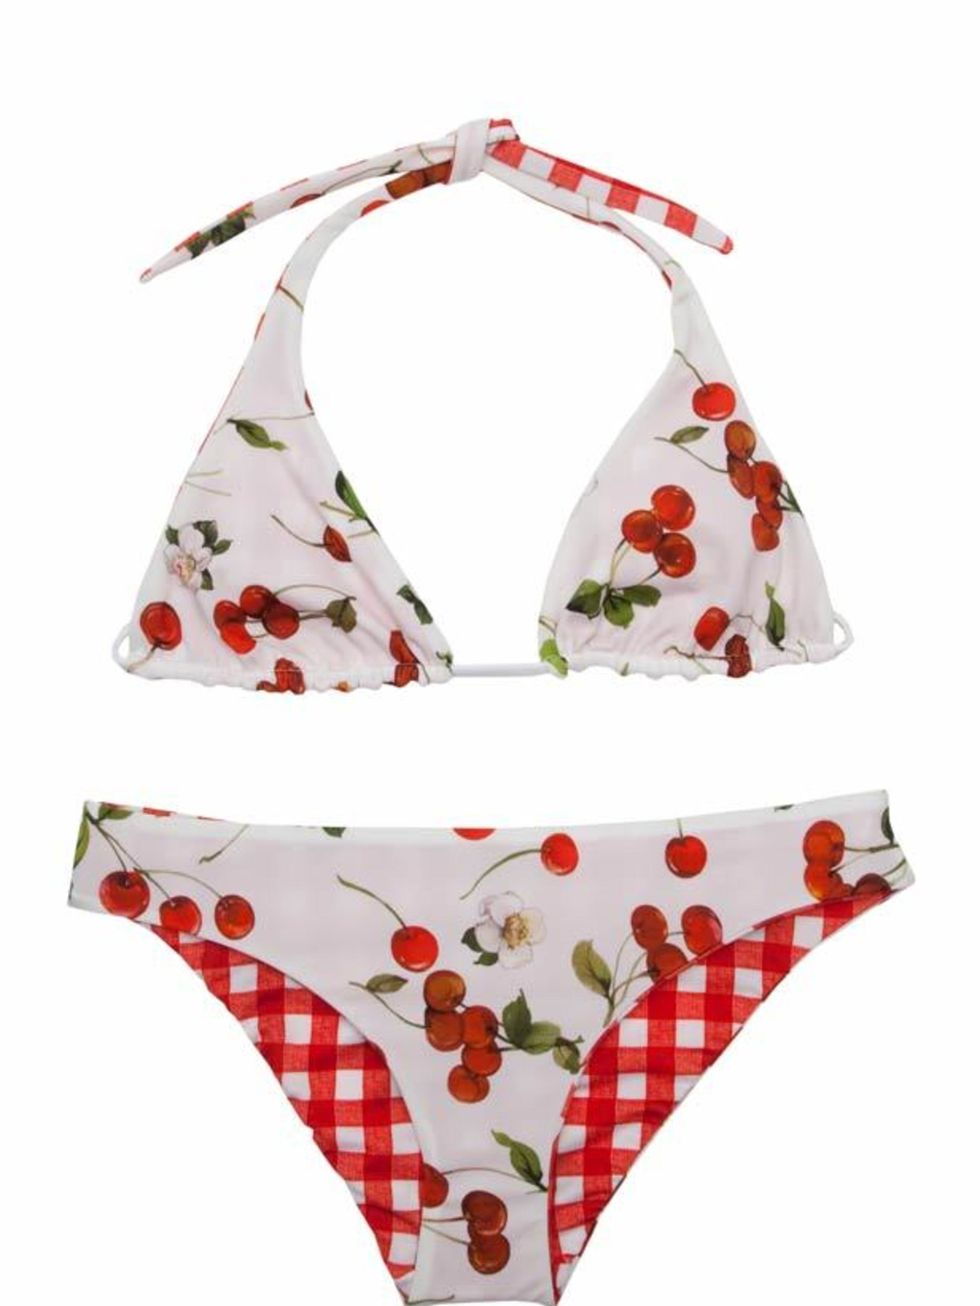 <p>D&amp;G cherry print bikini, £185, at <a href="http://www.harveynichols.com/womens/categories-1/beachwear-swimwear/bikinis/s354419-reversible-halterneck-bikini.html?colour=WHITE+AND+RED">Harvey Nichols</a></p>